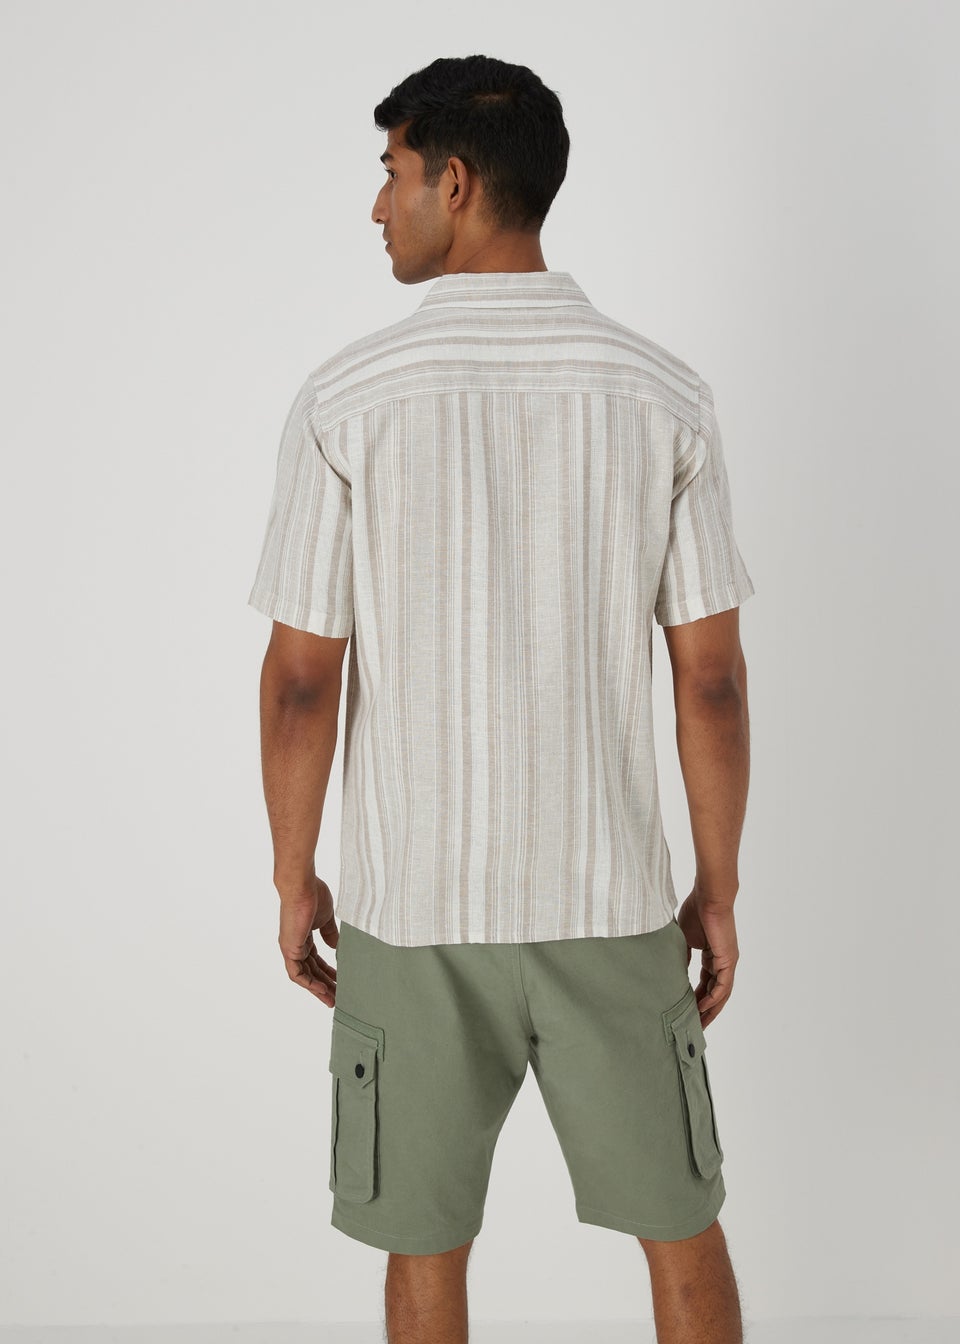 Stone Stripe Shirt